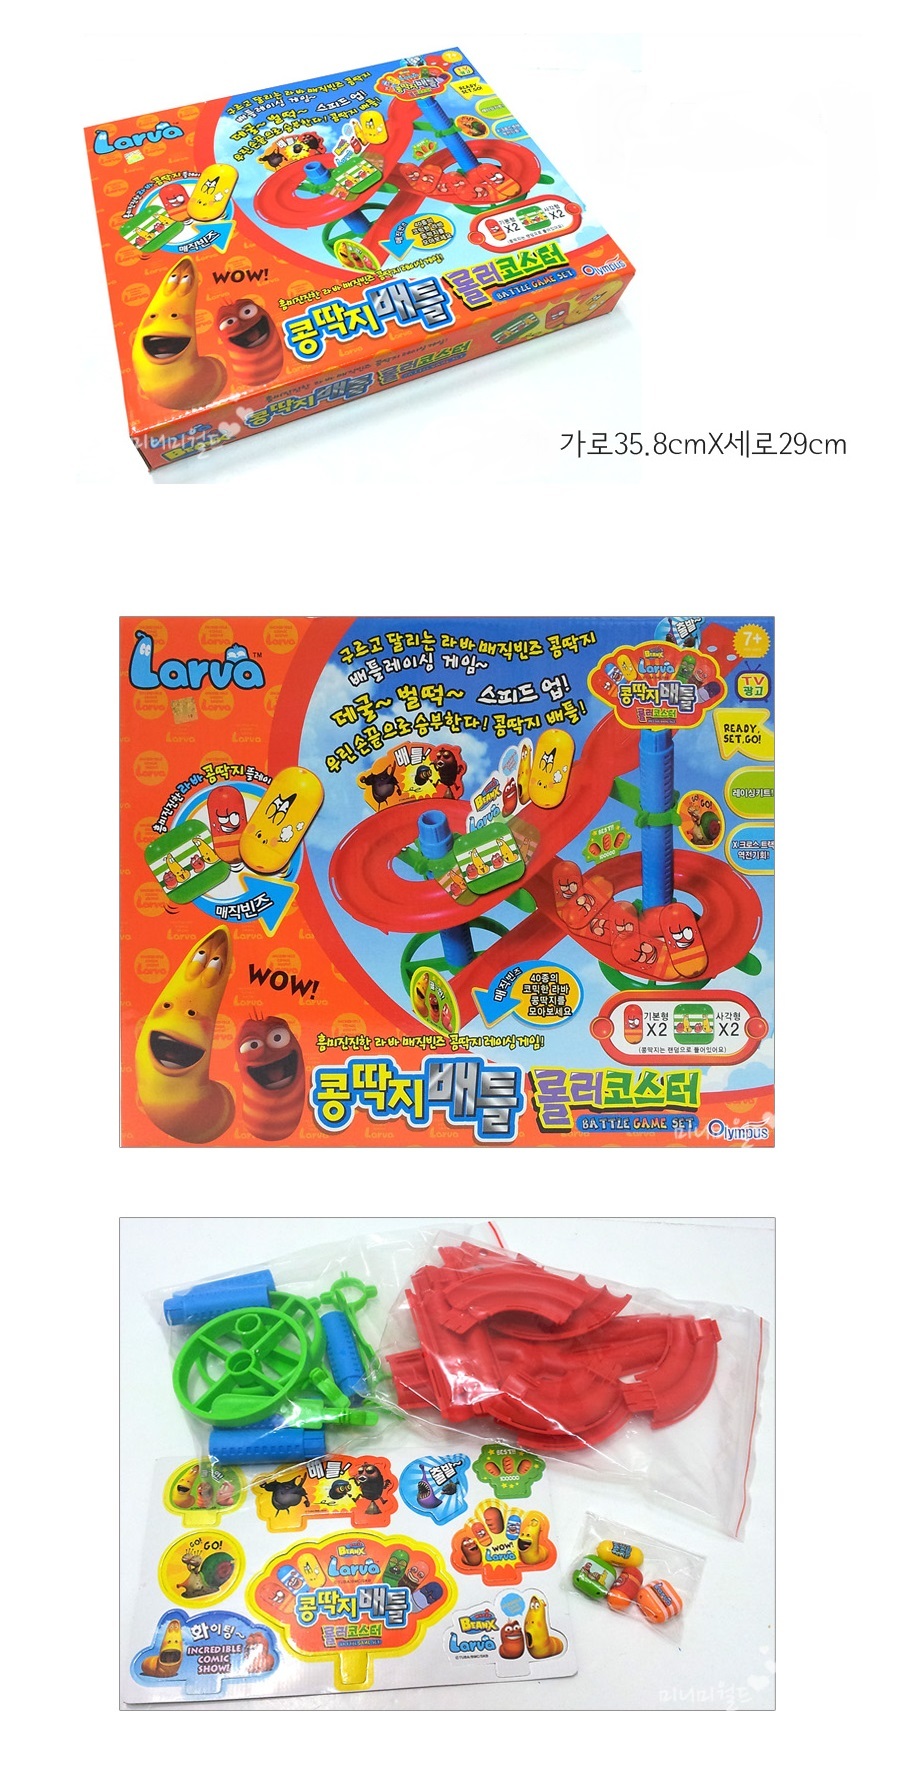 Larva Animation Character Kids Toy Magic Beans Roller Coaster Battle Game Set